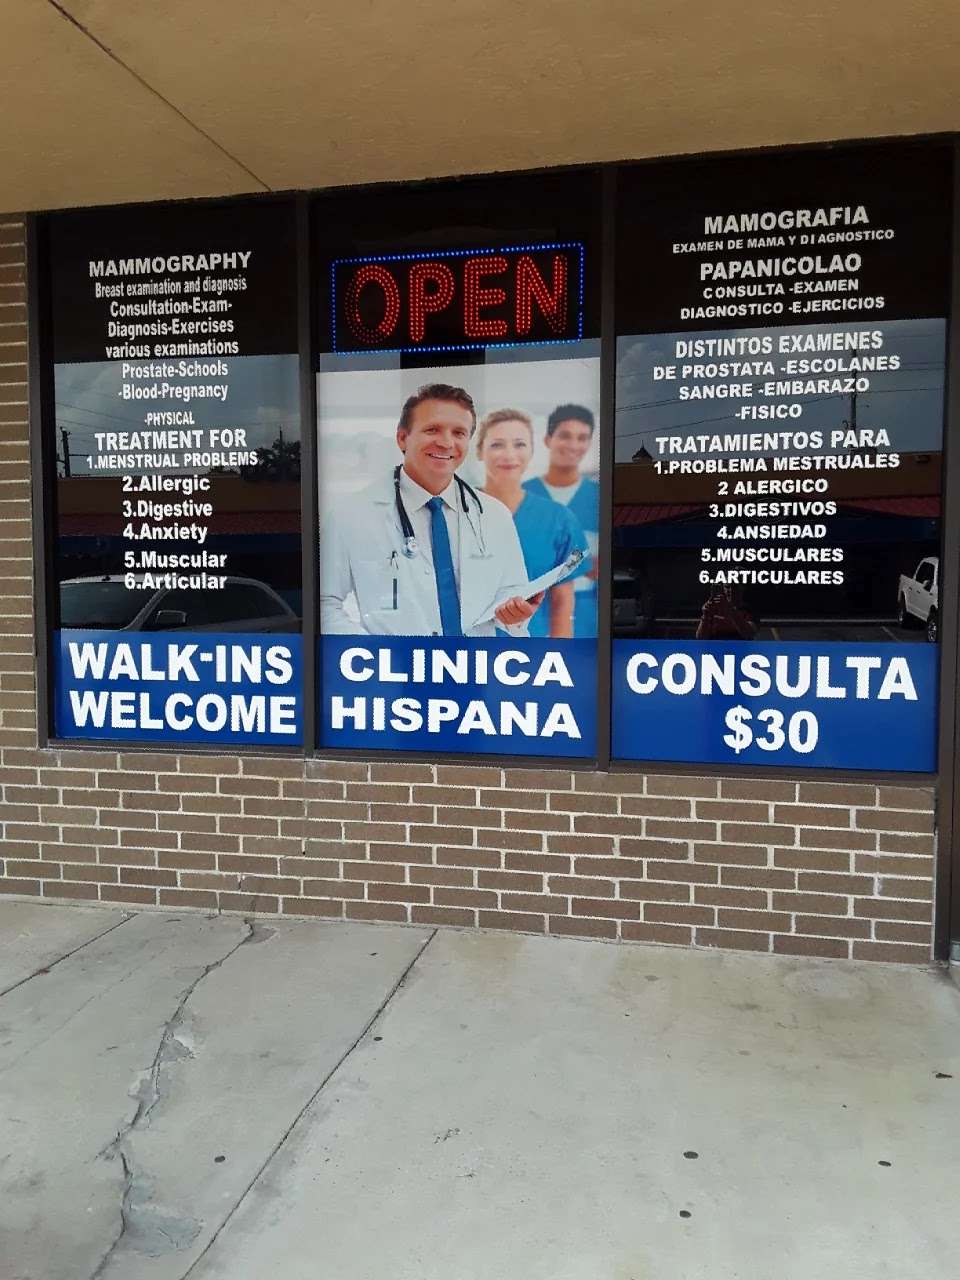 Clinica Gloria de America | 25188 I-45, Spring, TX 77386 | Phone: (832) 299-6144